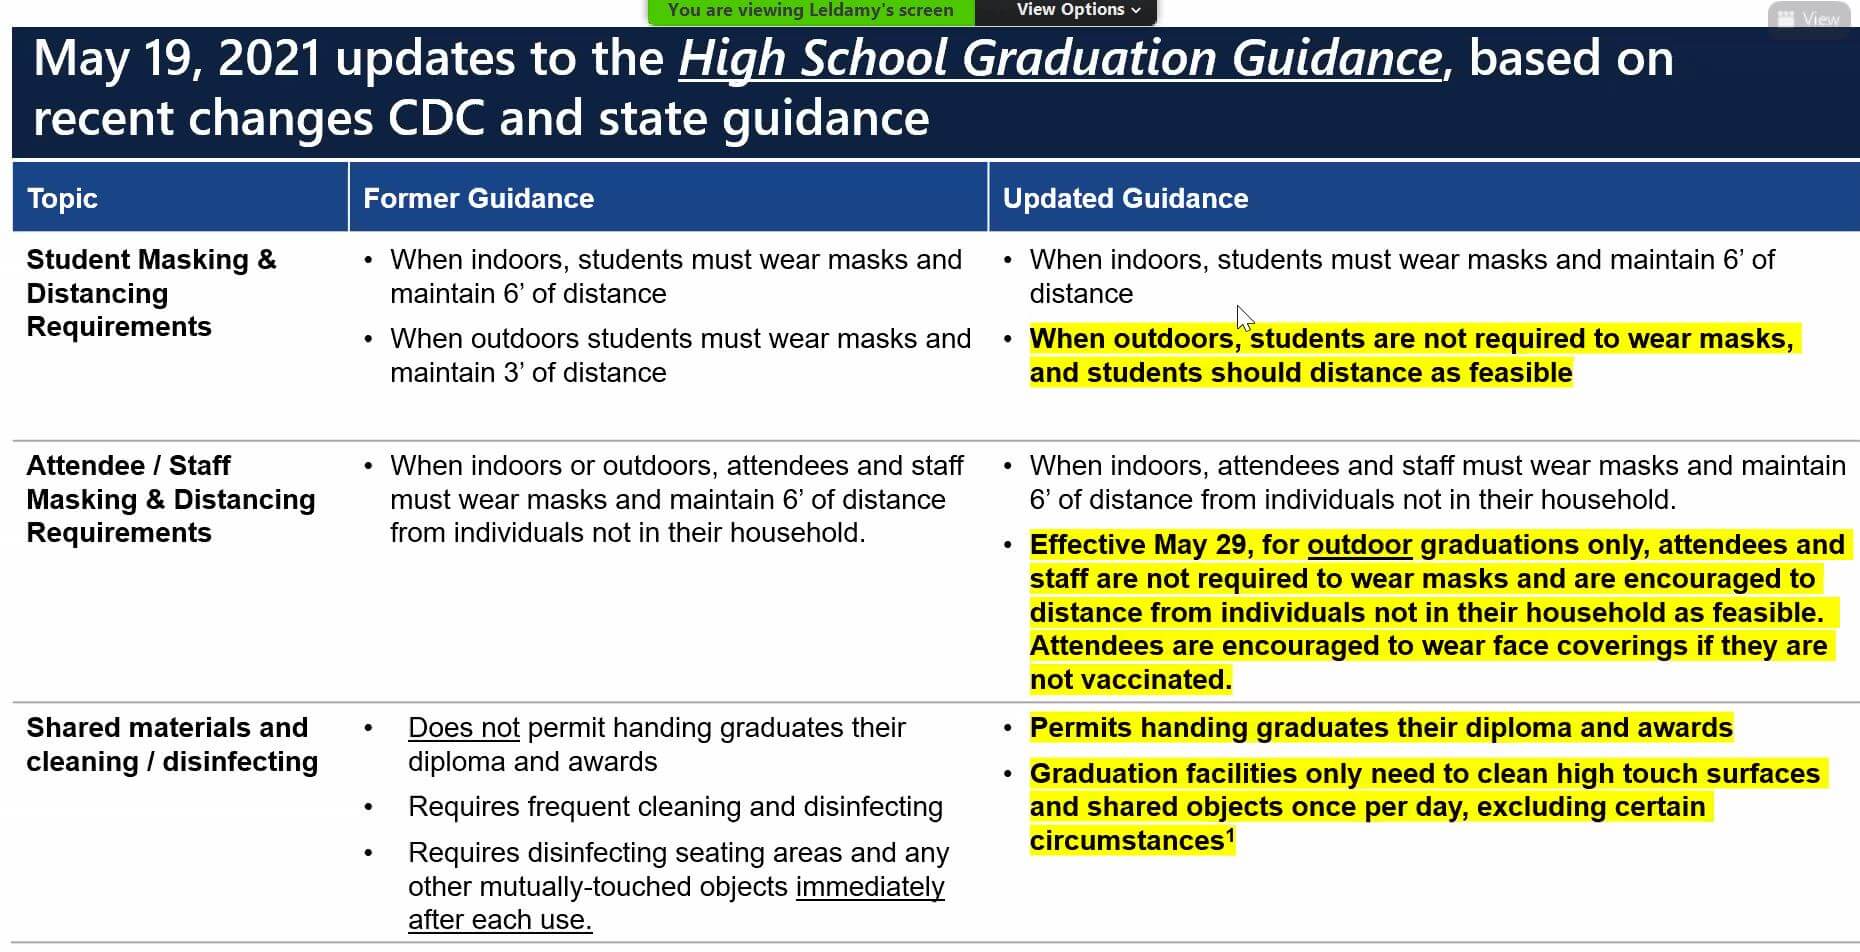 May 19, 2021 Updates to High School Graduation Guidance